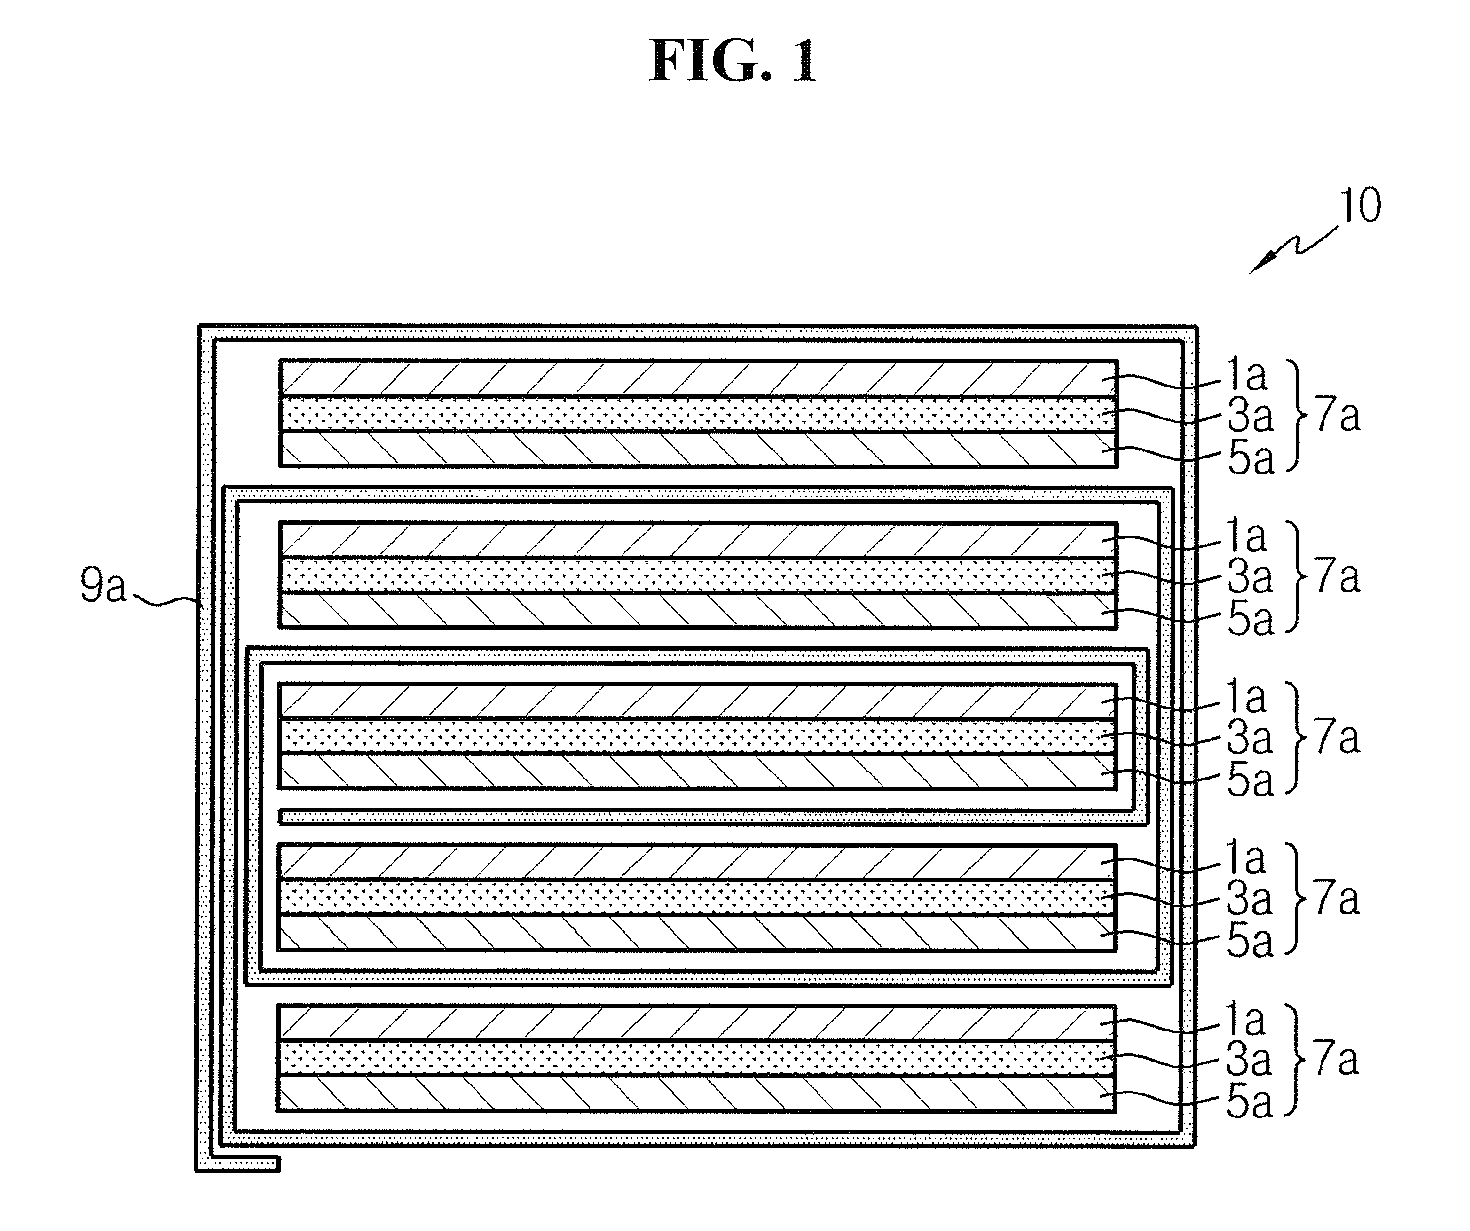 Stack-folding type electrode assembly